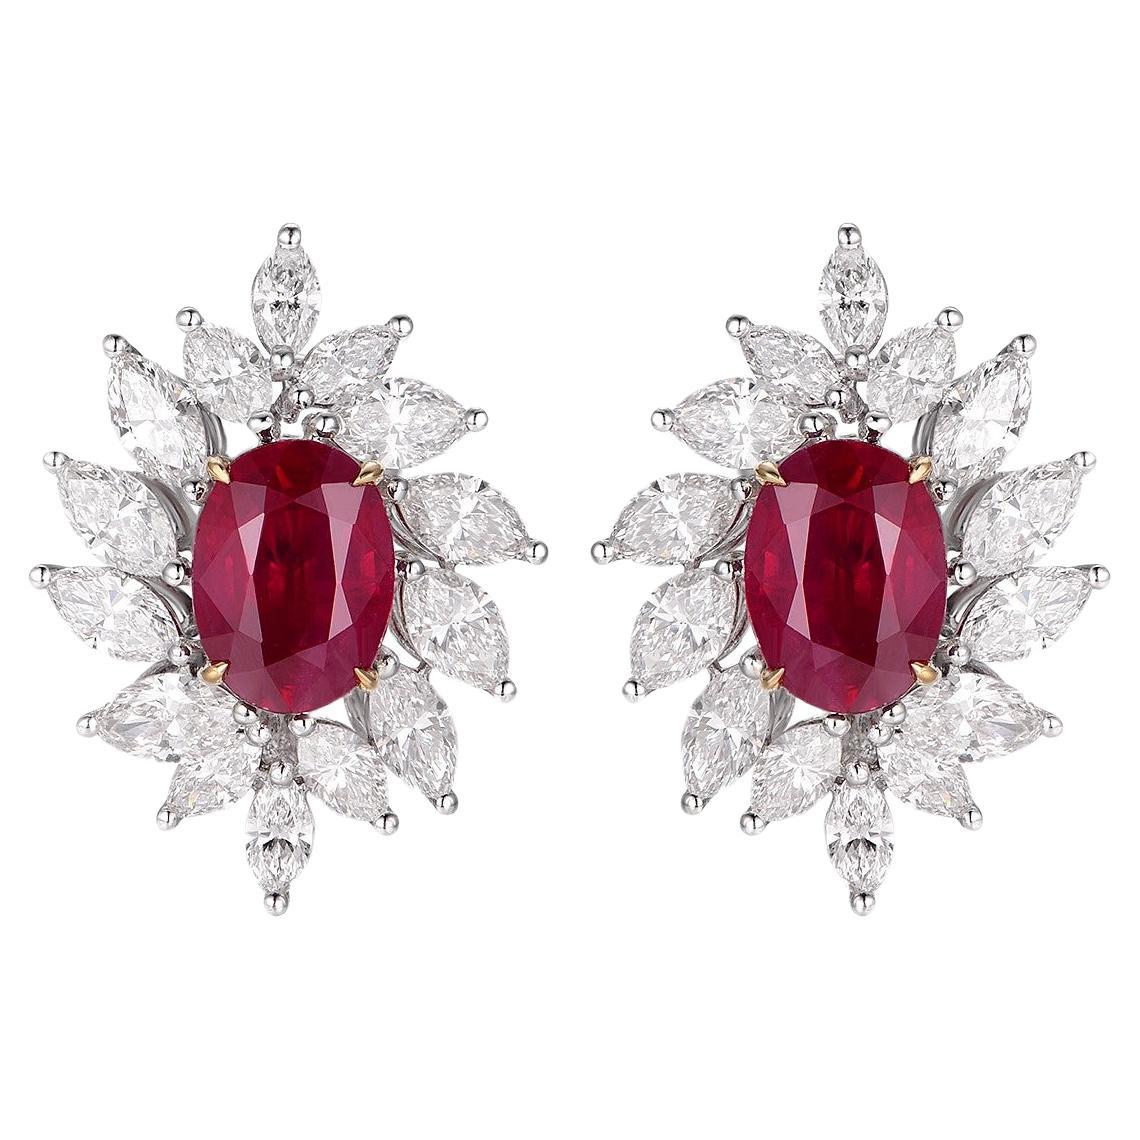 GIA Certified 2.98 Carat Burma Ruby Diamond Earrings in 18K White Gold